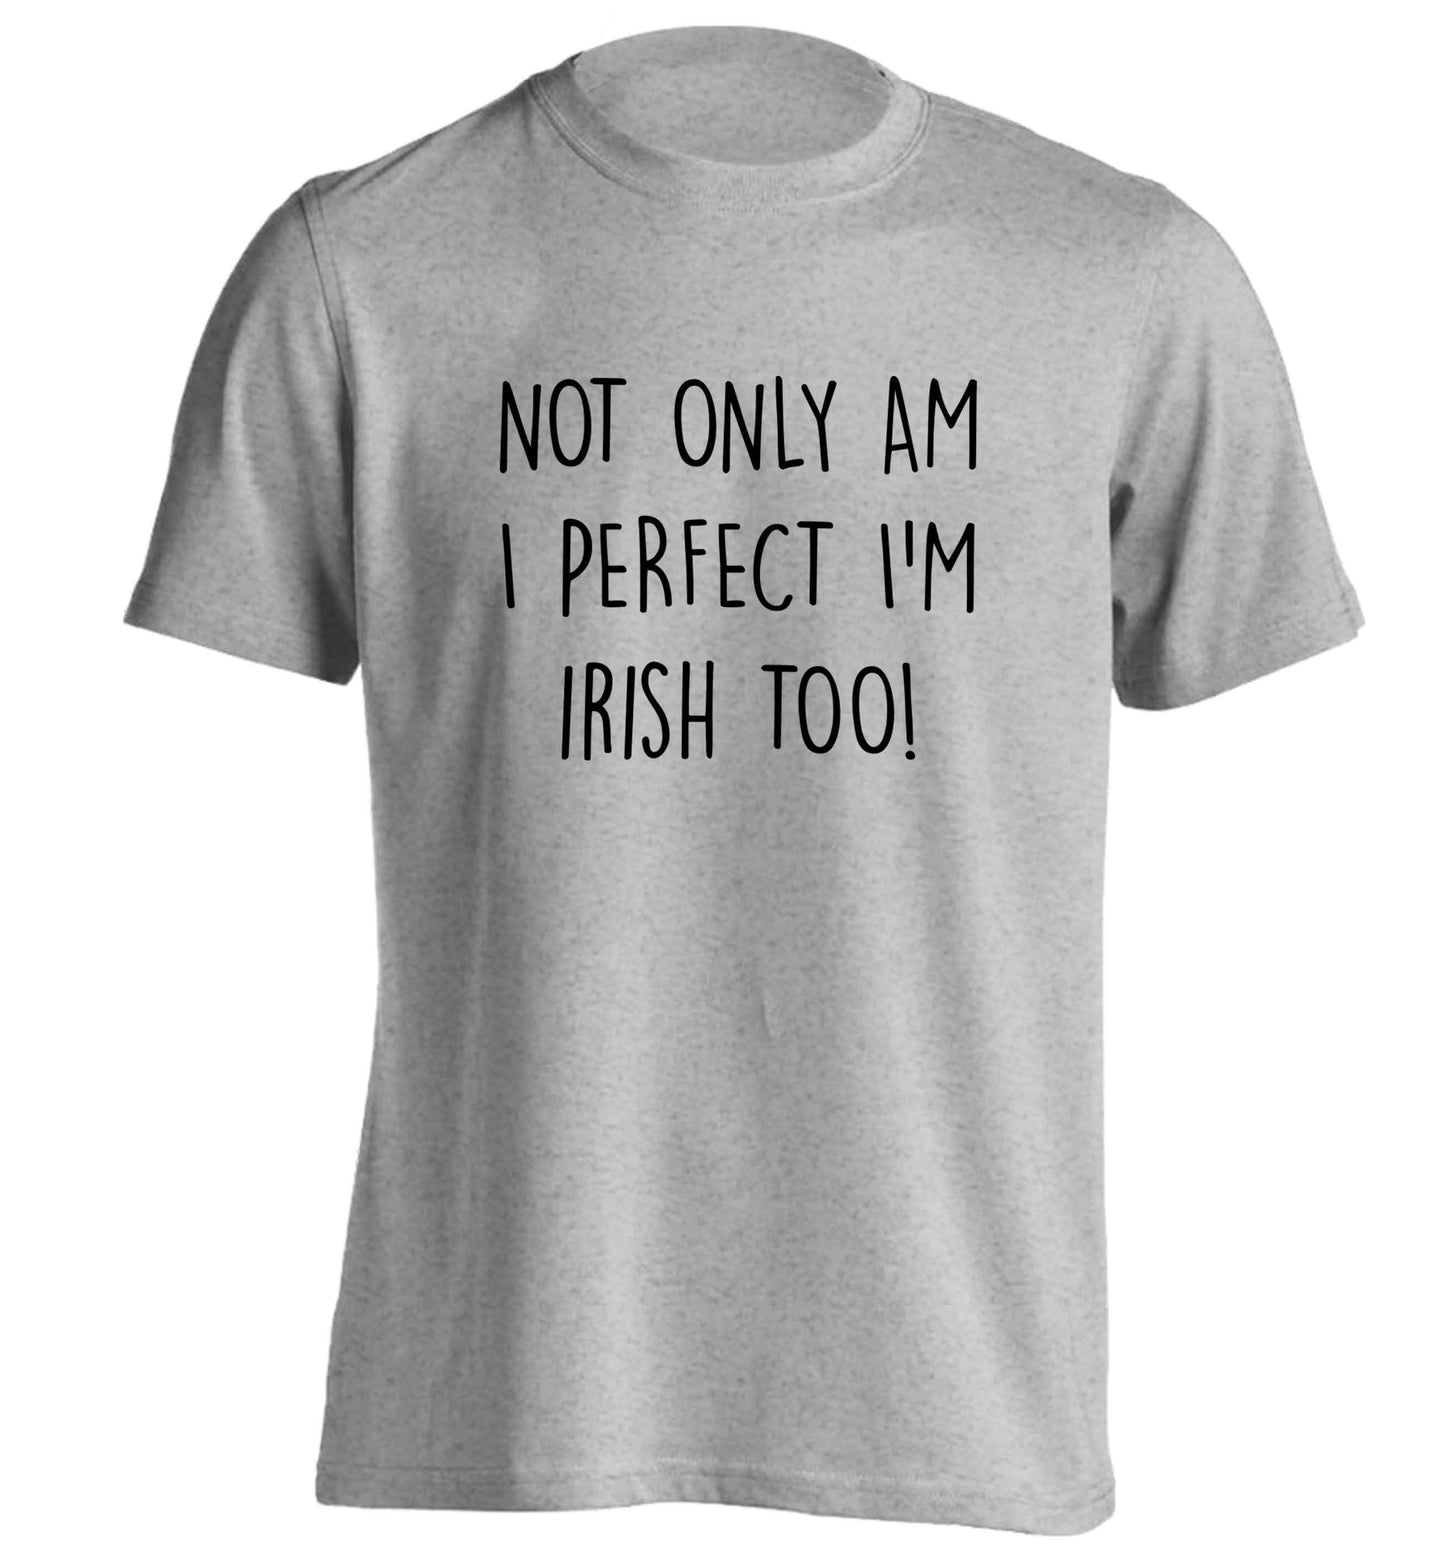 Not only am I perfect I'm Irish too! adults unisex grey Tshirt 2XL